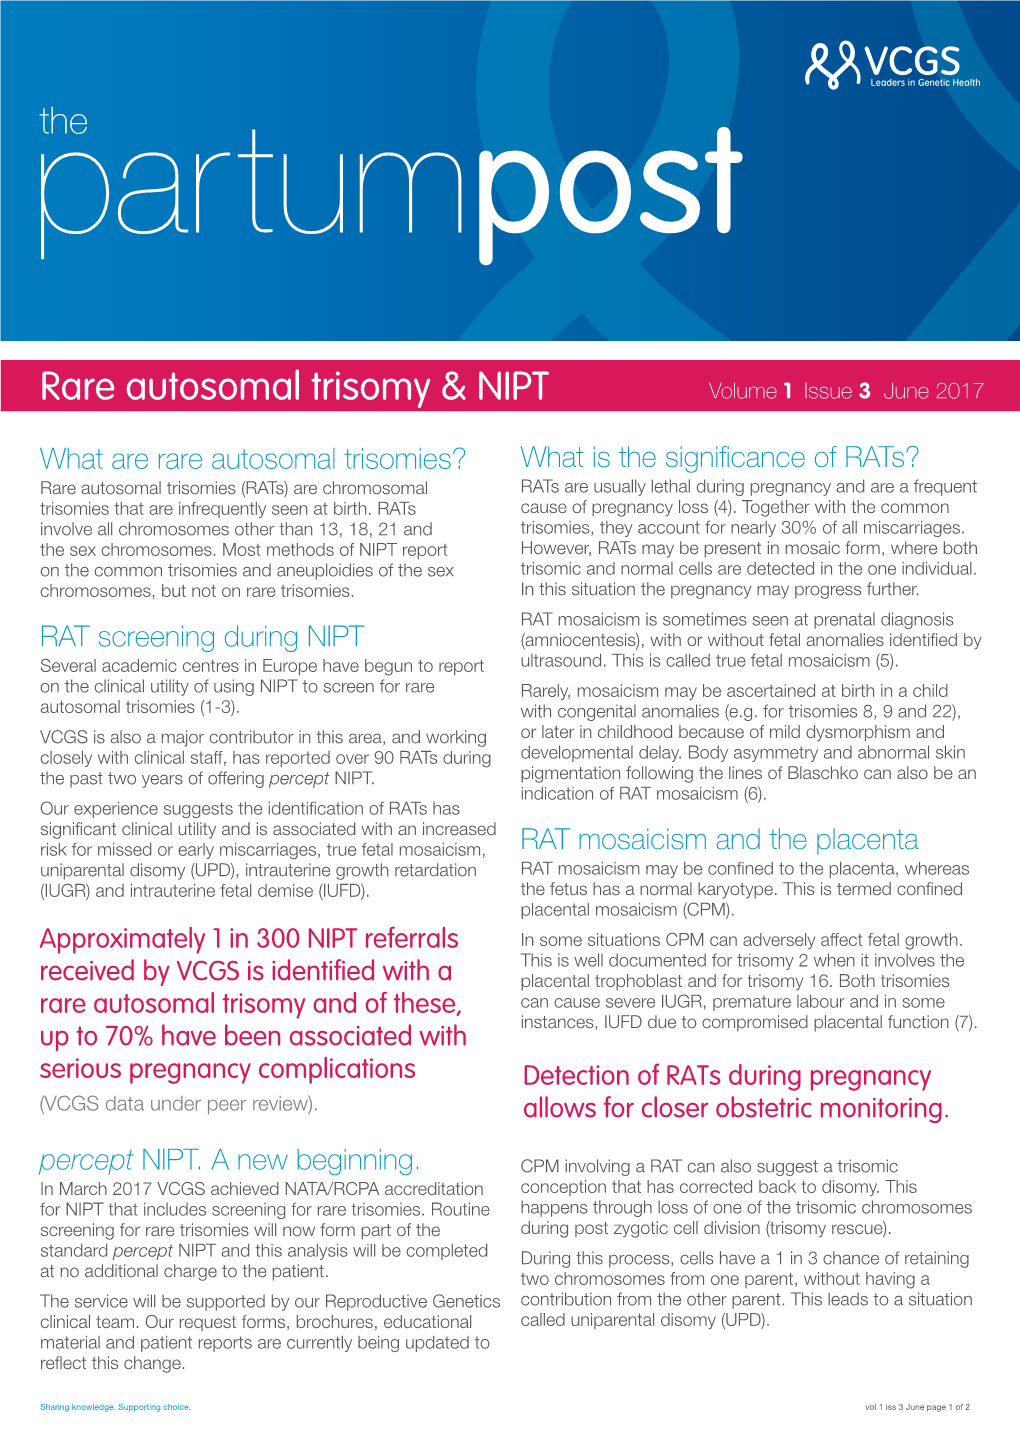 Rare Autosomal Trisomy & NIPT